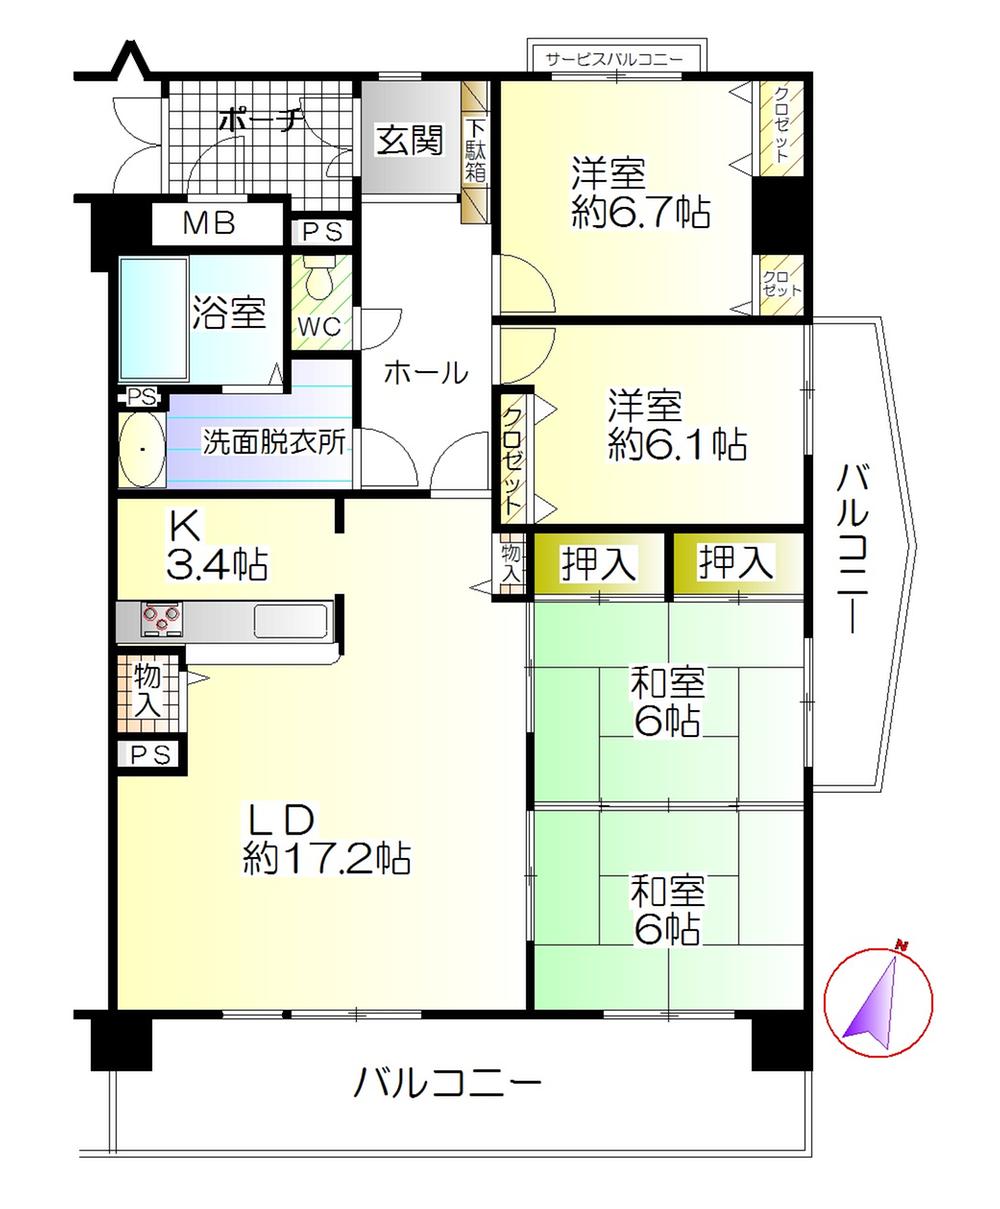 Floor plan. 4LDK, Price 15.8 million yen, Footprint 100.15 sq m , Balcony area 21.4 sq m 4LDK 100 sq m apartment